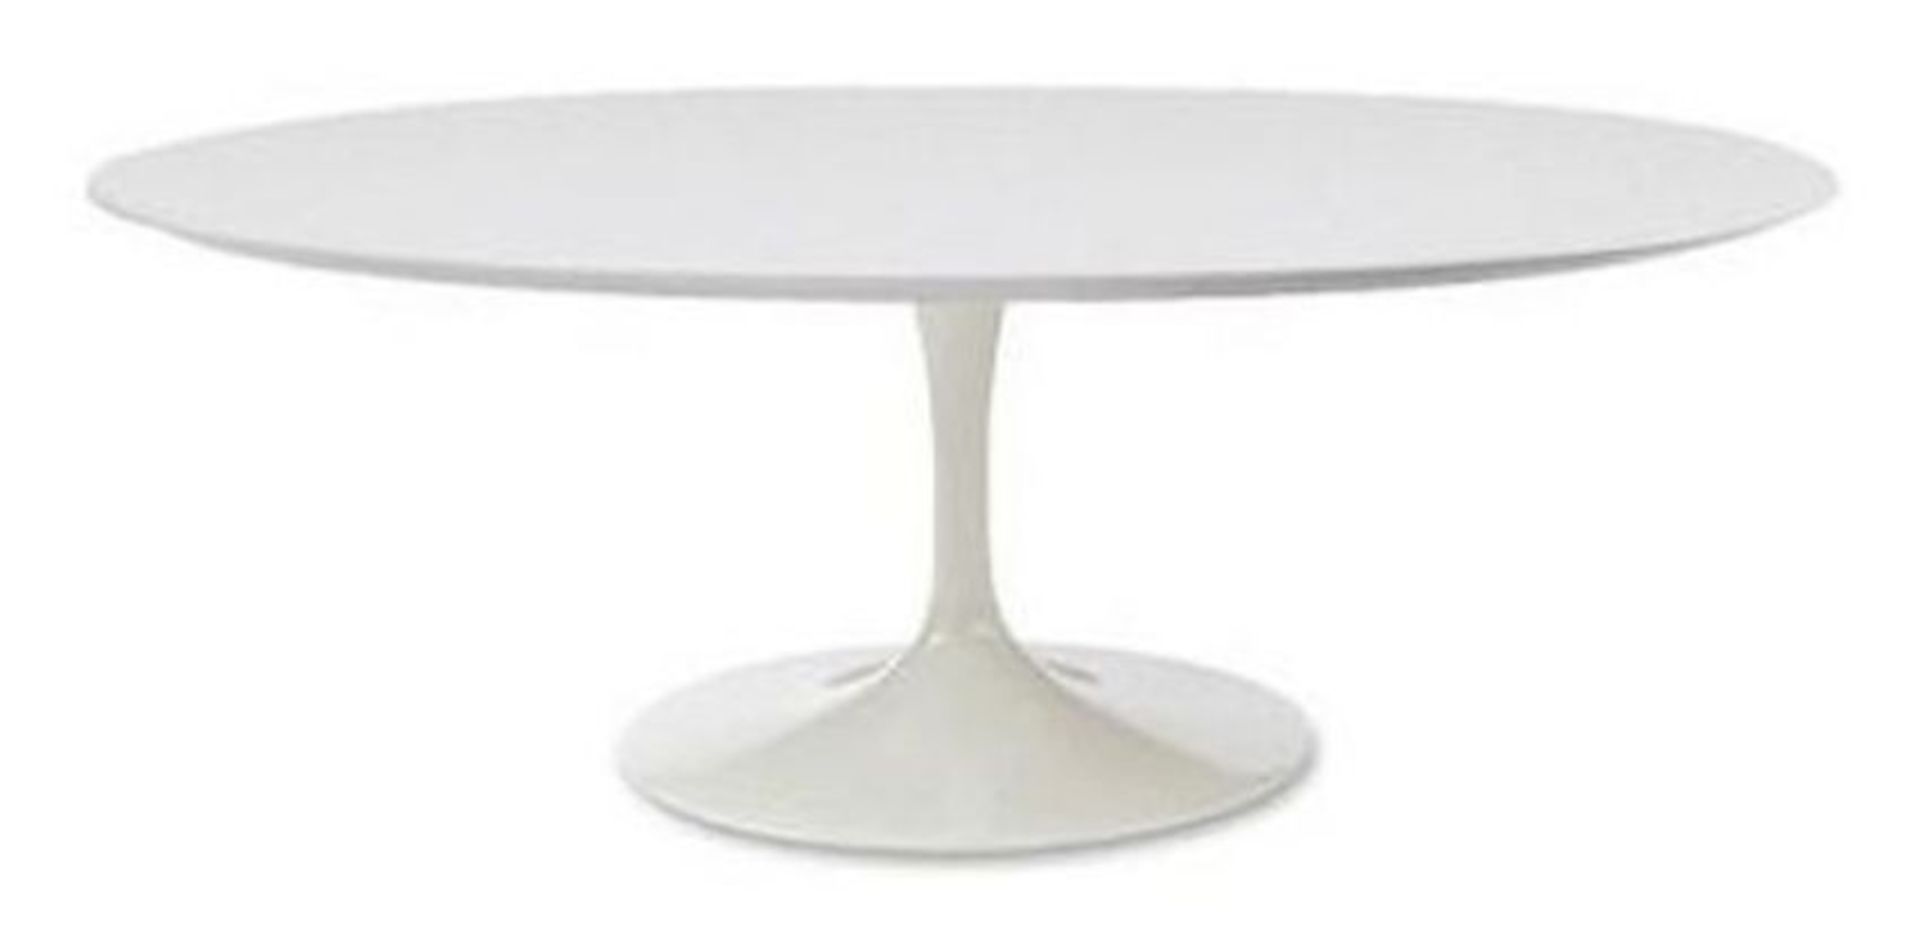 Eero Saarinen Inspired Large Oval Dining Table - New - Image 2 of 3